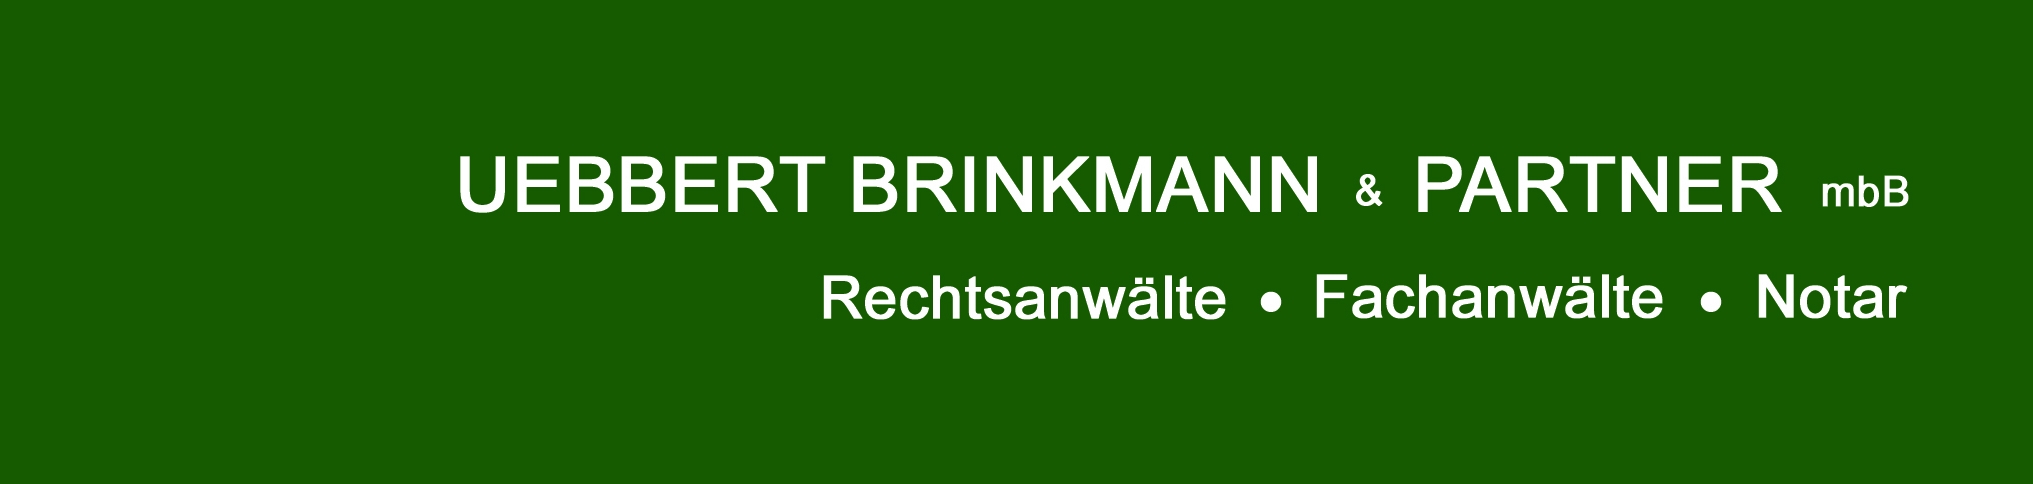 Uebbert-Brinkmann-Abke